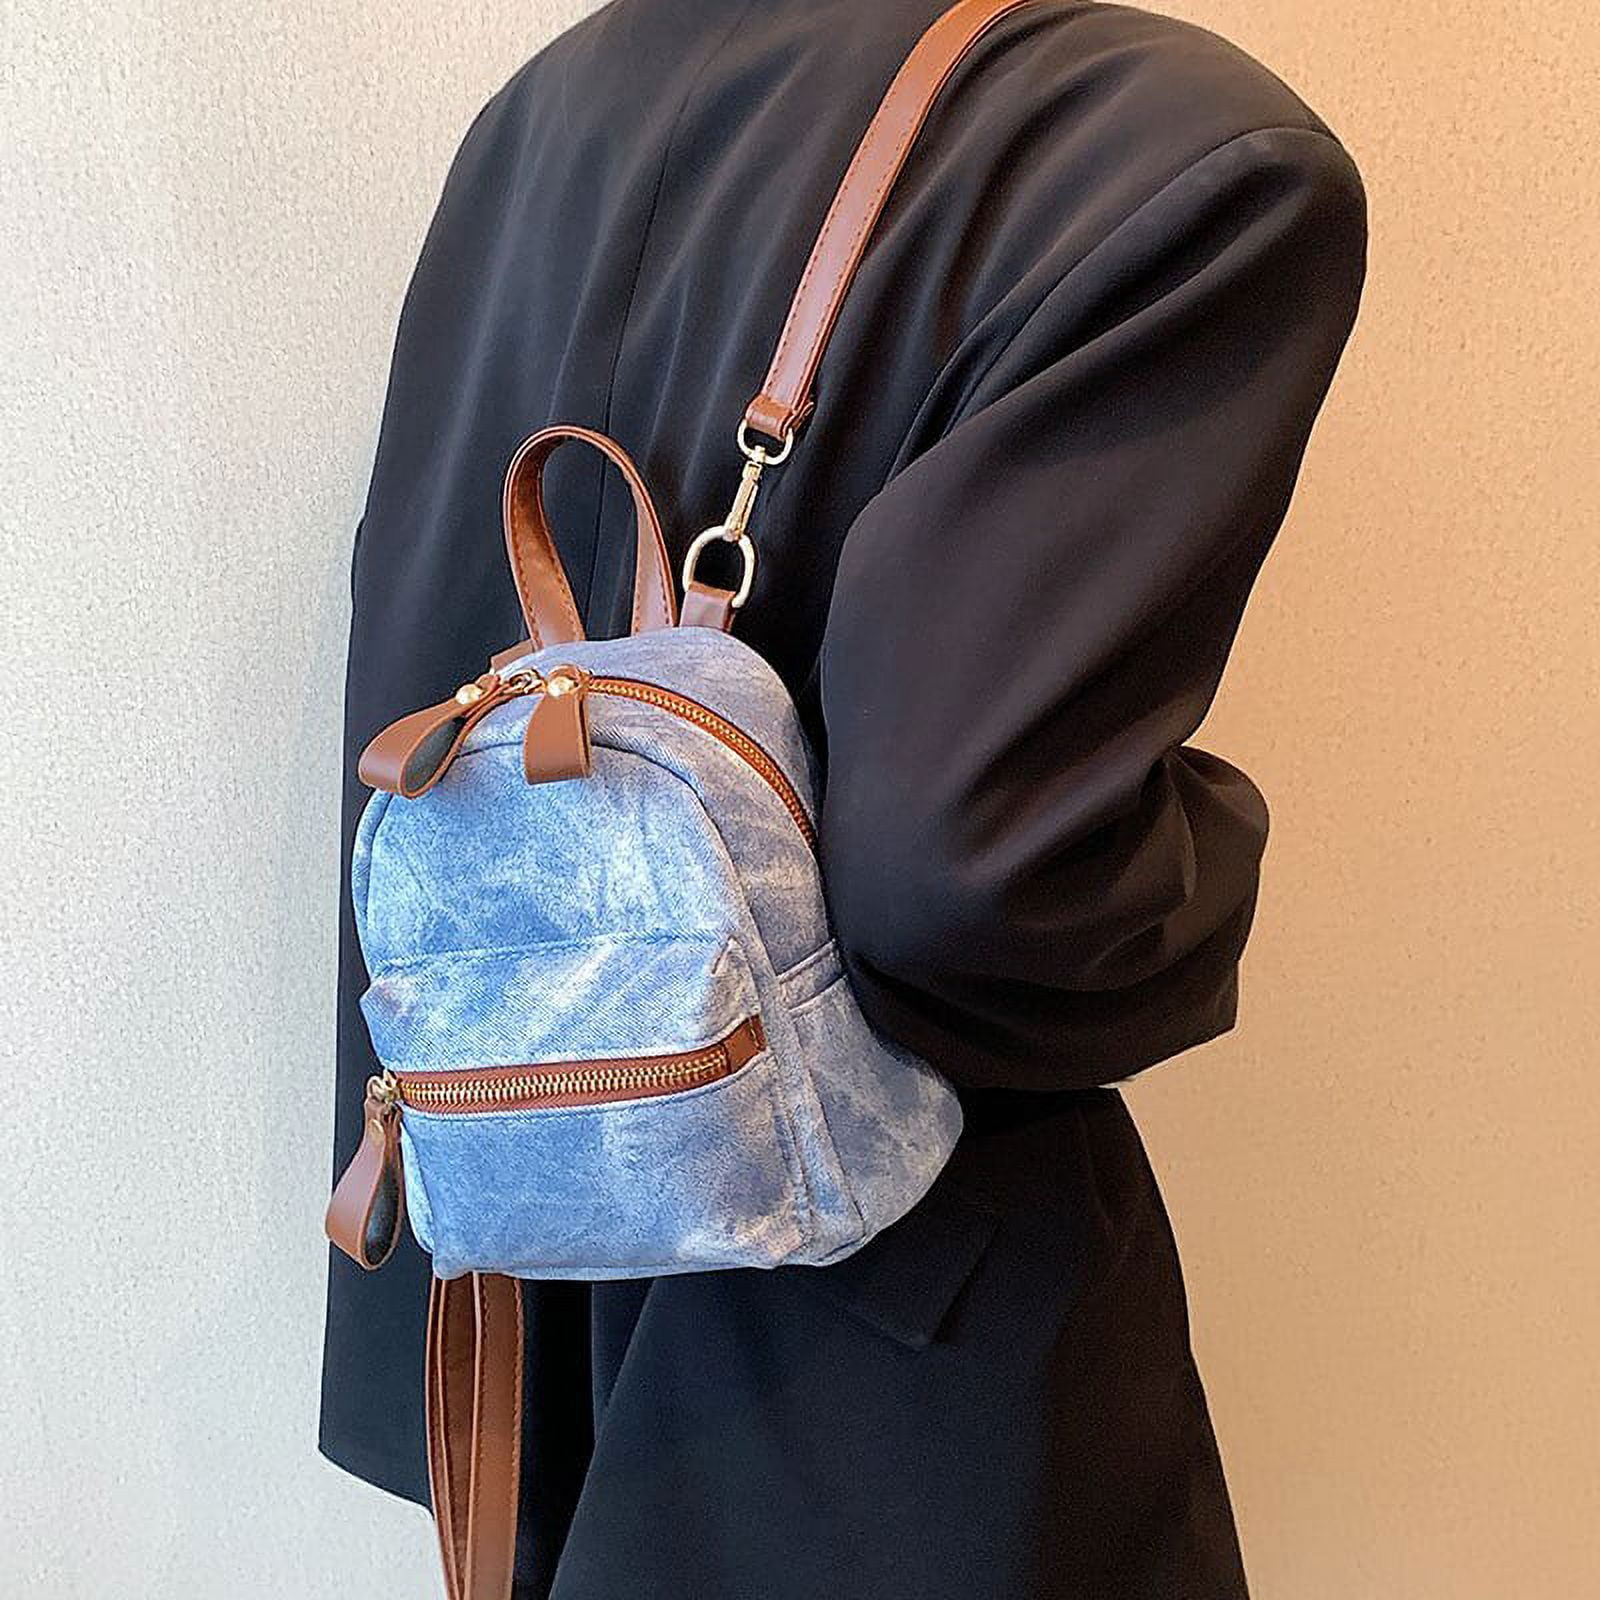 CoCopeaunts Fashion Women Leather Luxury Backpack Chain Teenage Girls  Shoulder Bag New Designer Backpacks Rucksack Small Female Daypack Bags